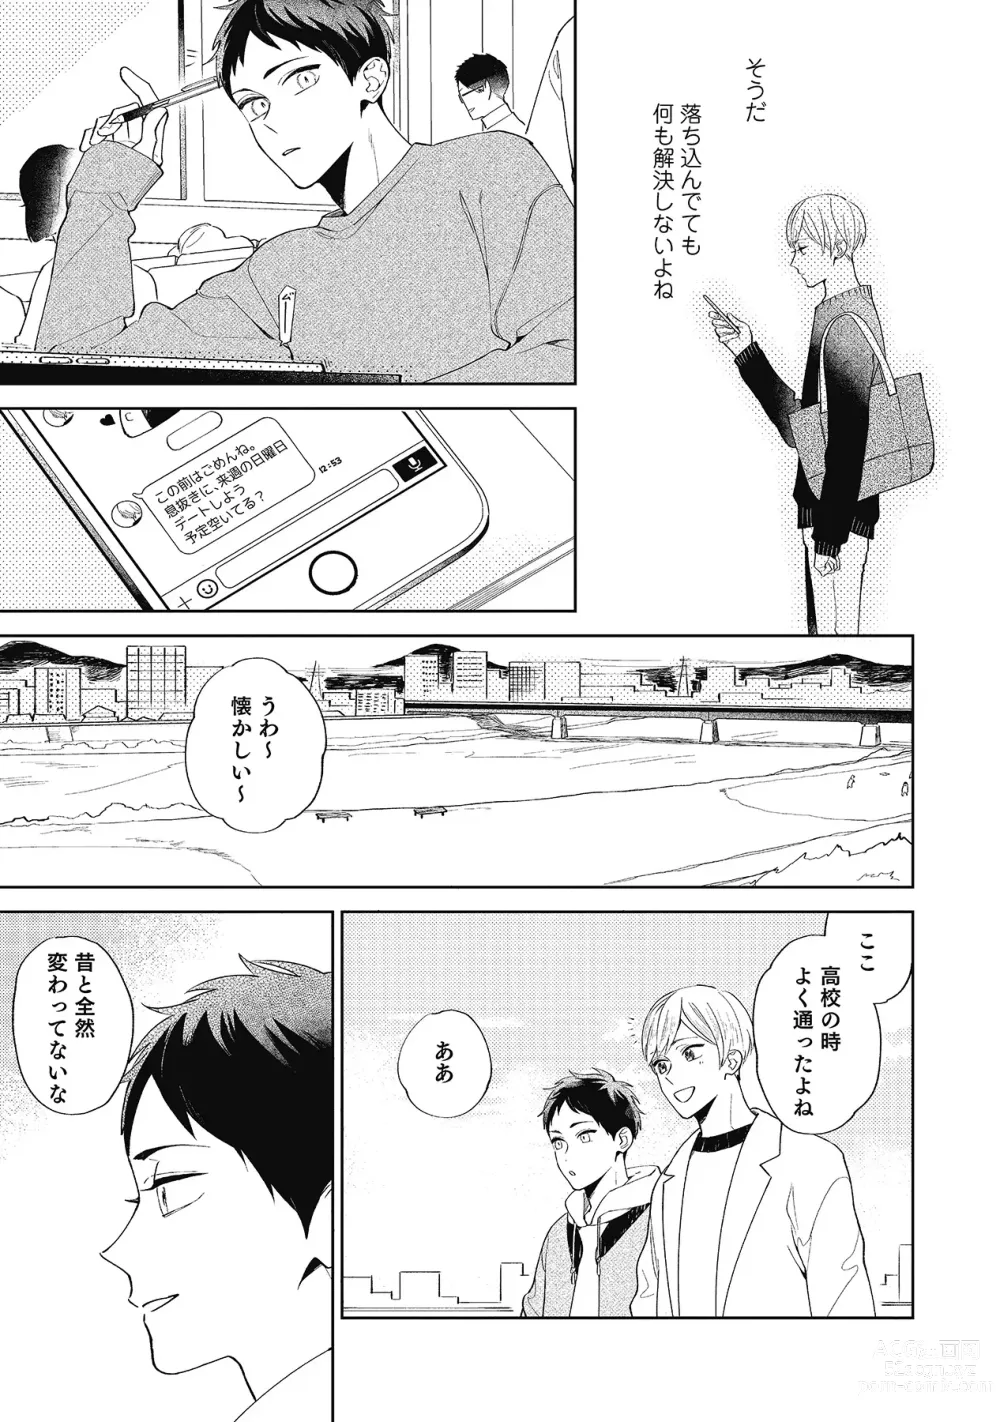 Page 23 of manga Sentimental Darling